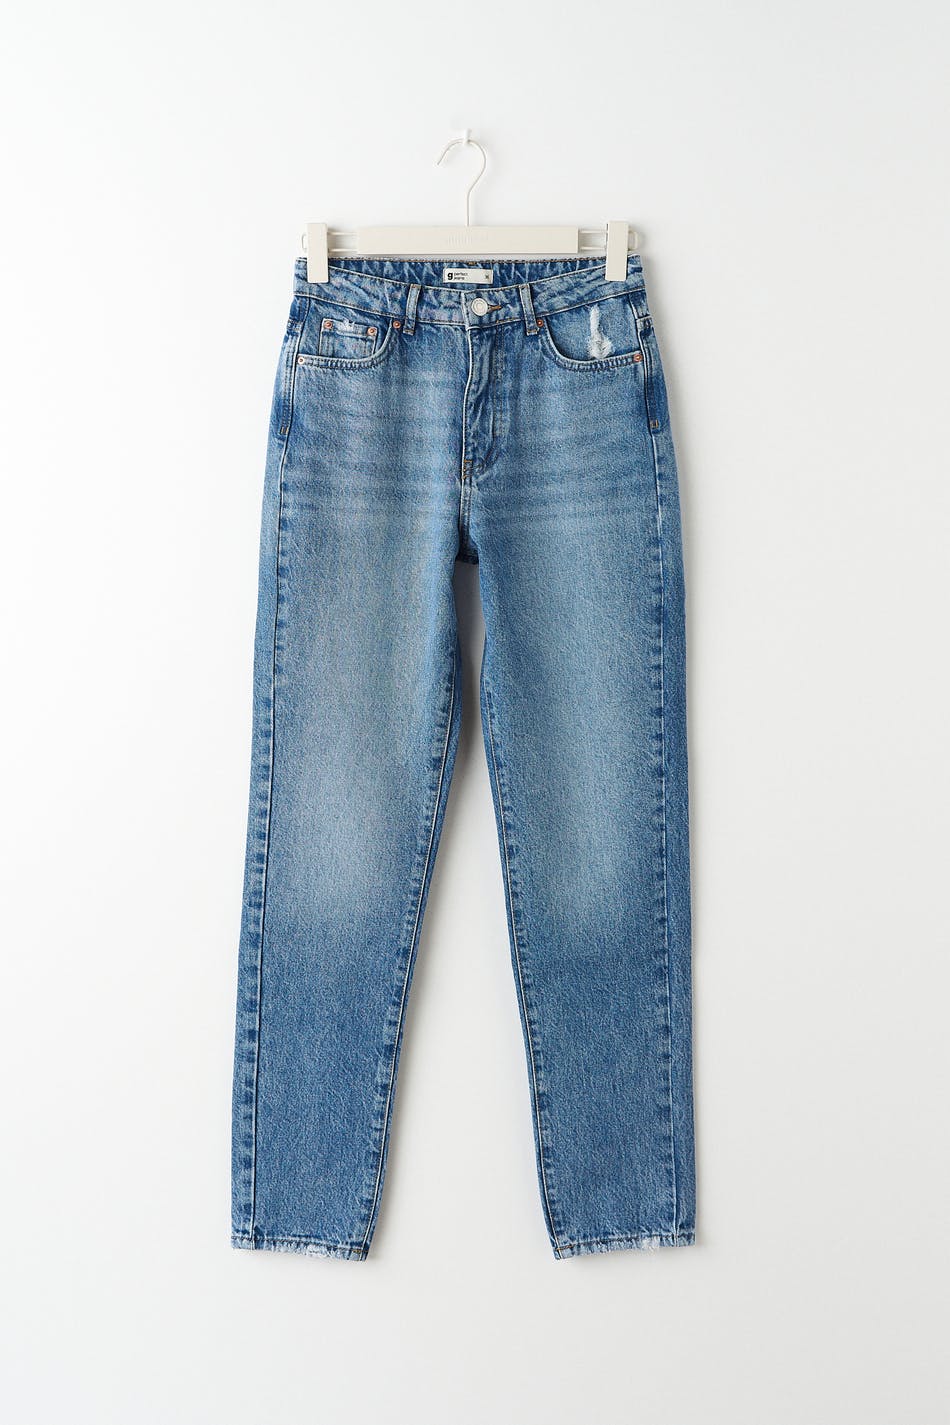 Dagny tall jeans, Gina Tricot